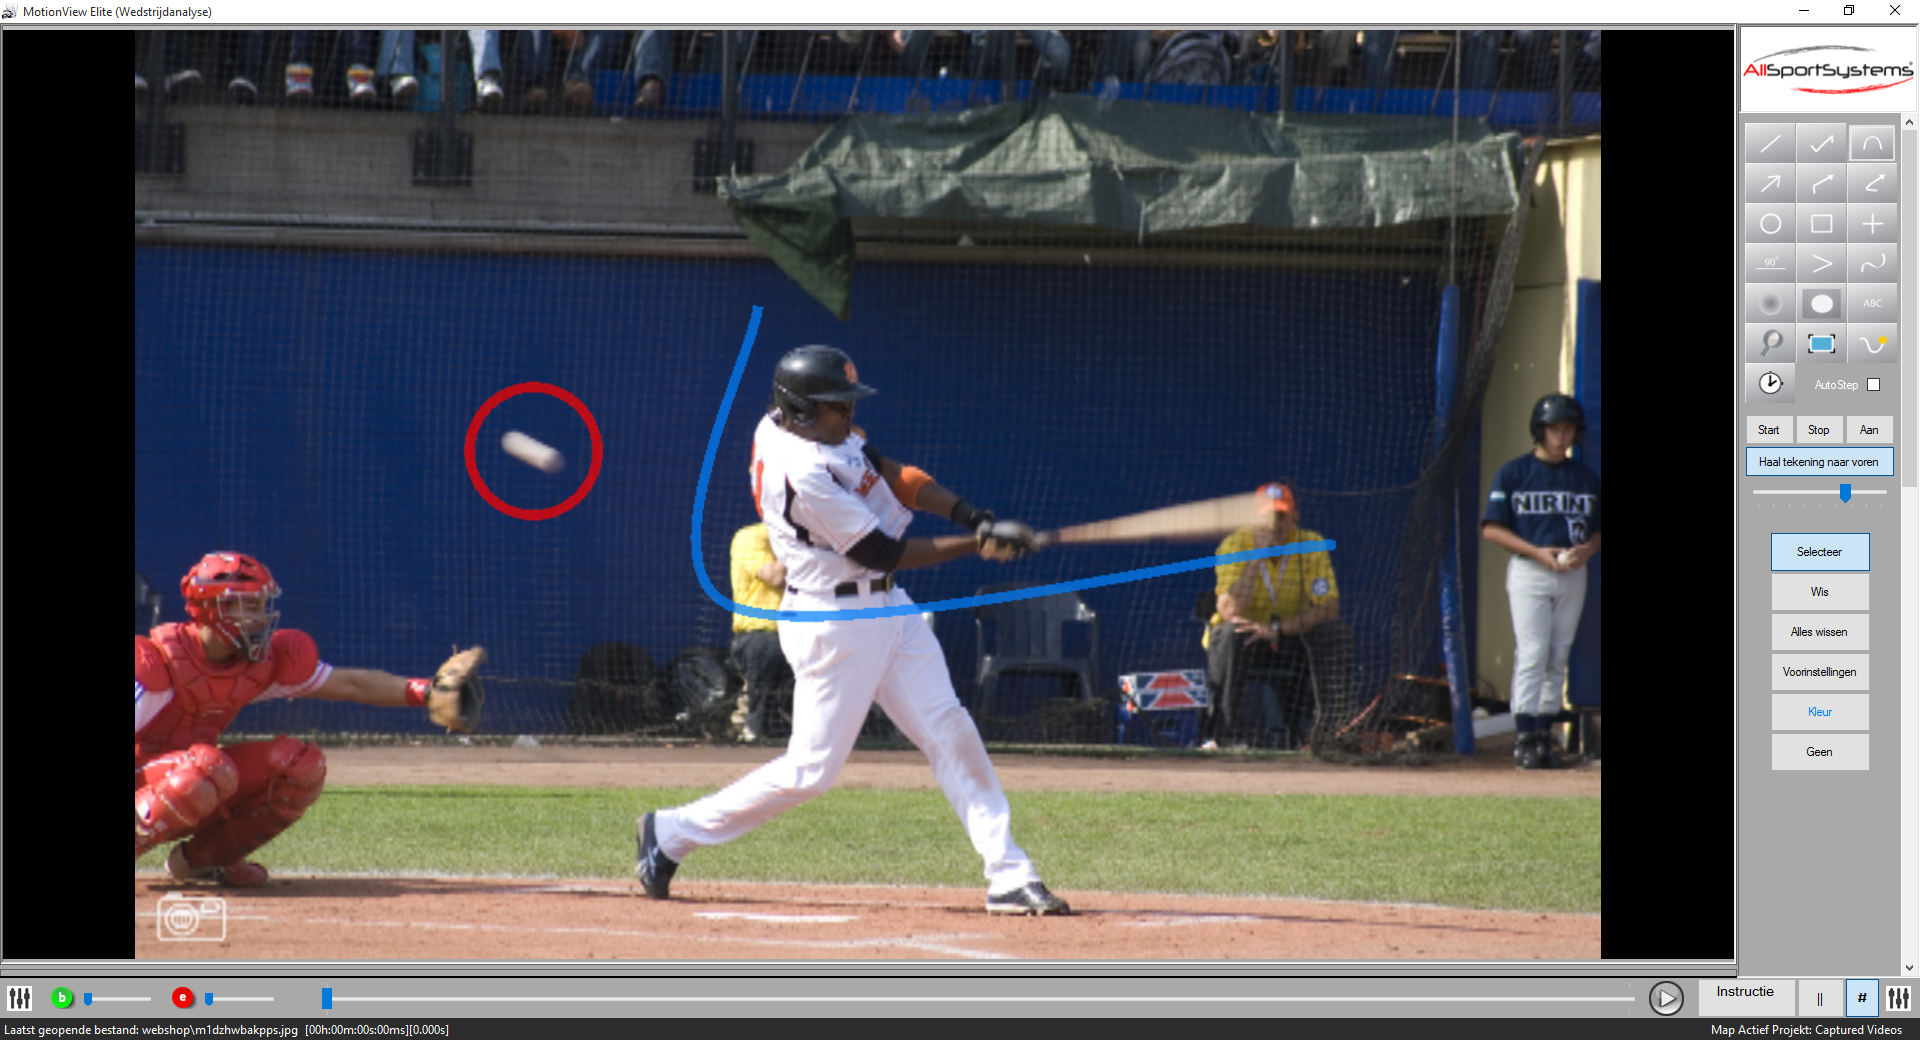 MotionView - Baseball - Video Analysis Software